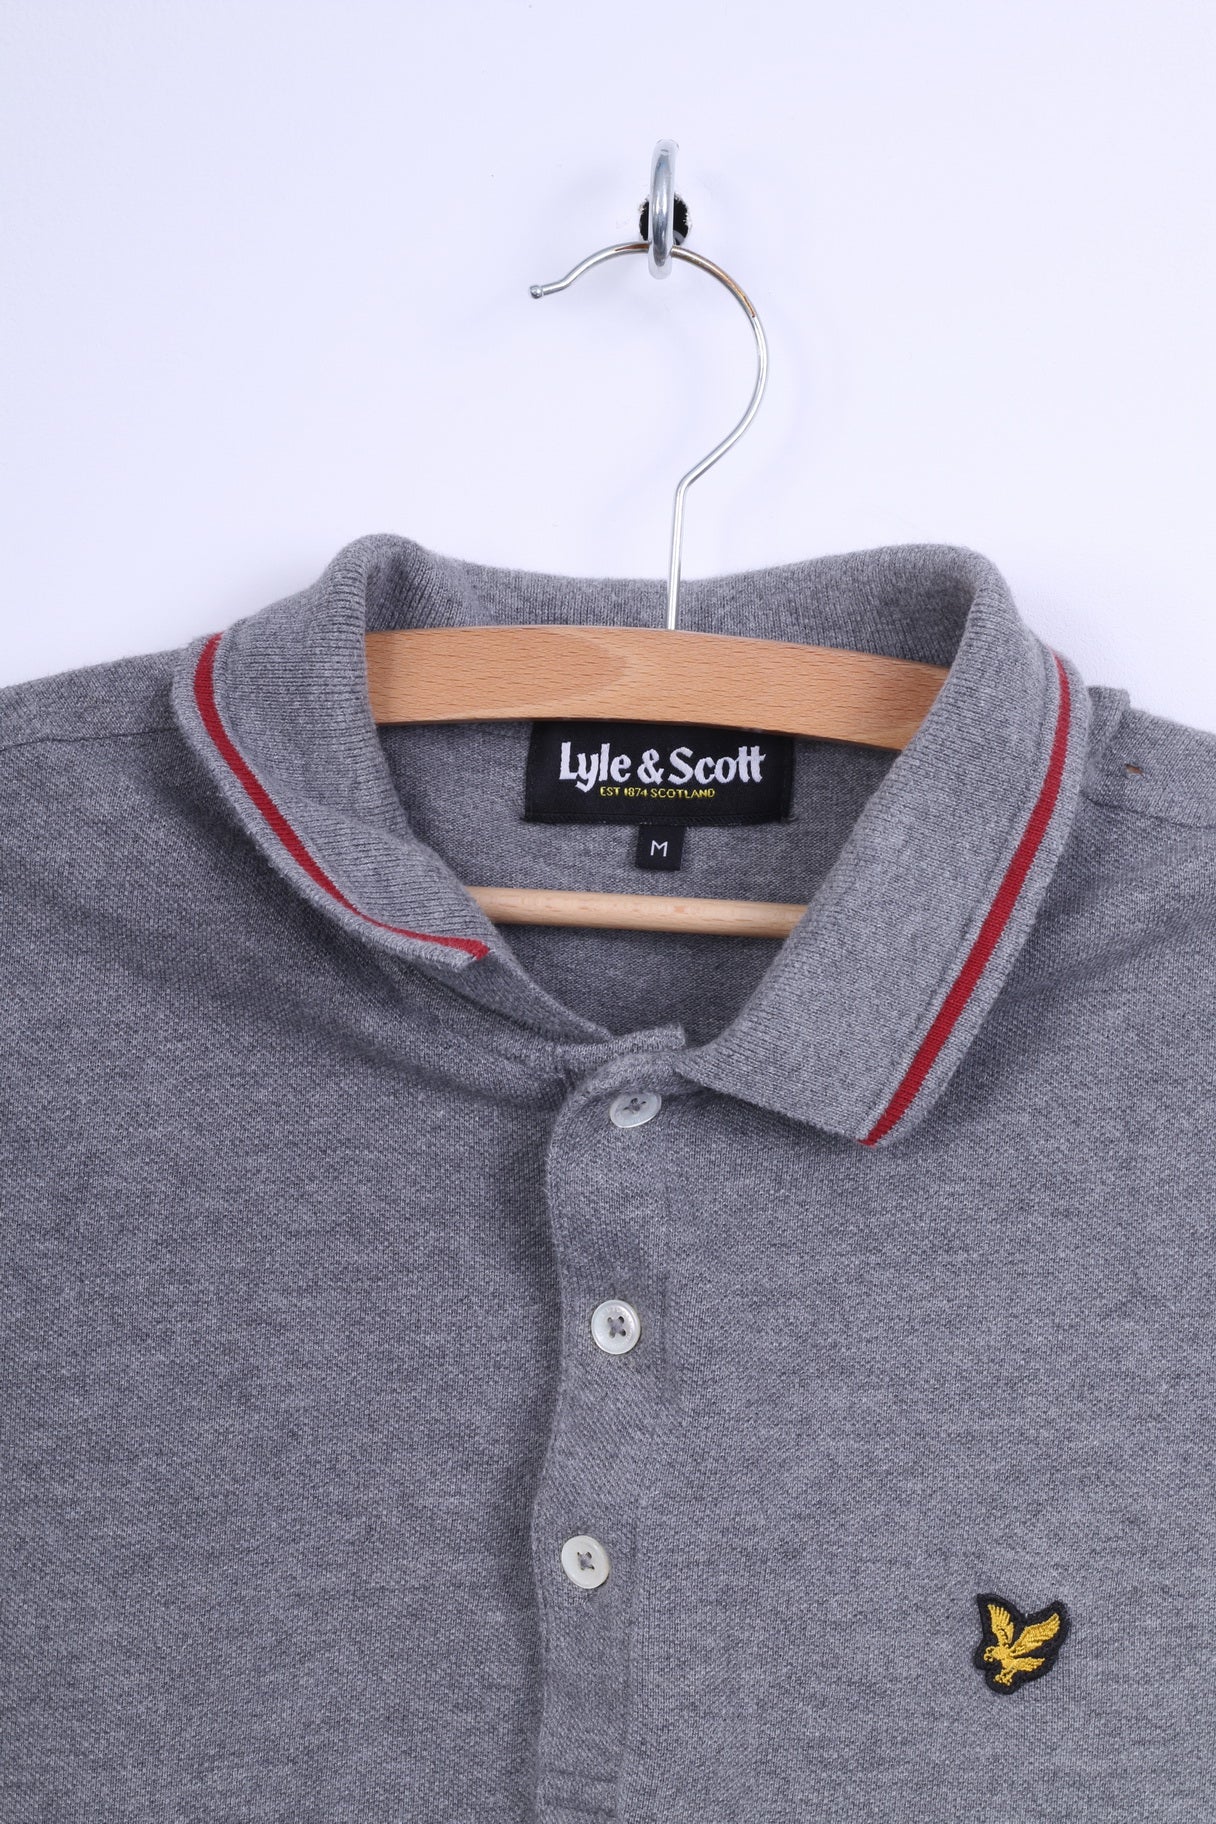 Lyle & Scott Mens M (S) Polo Shirt Grey Cotton Scotland Short Sleeve